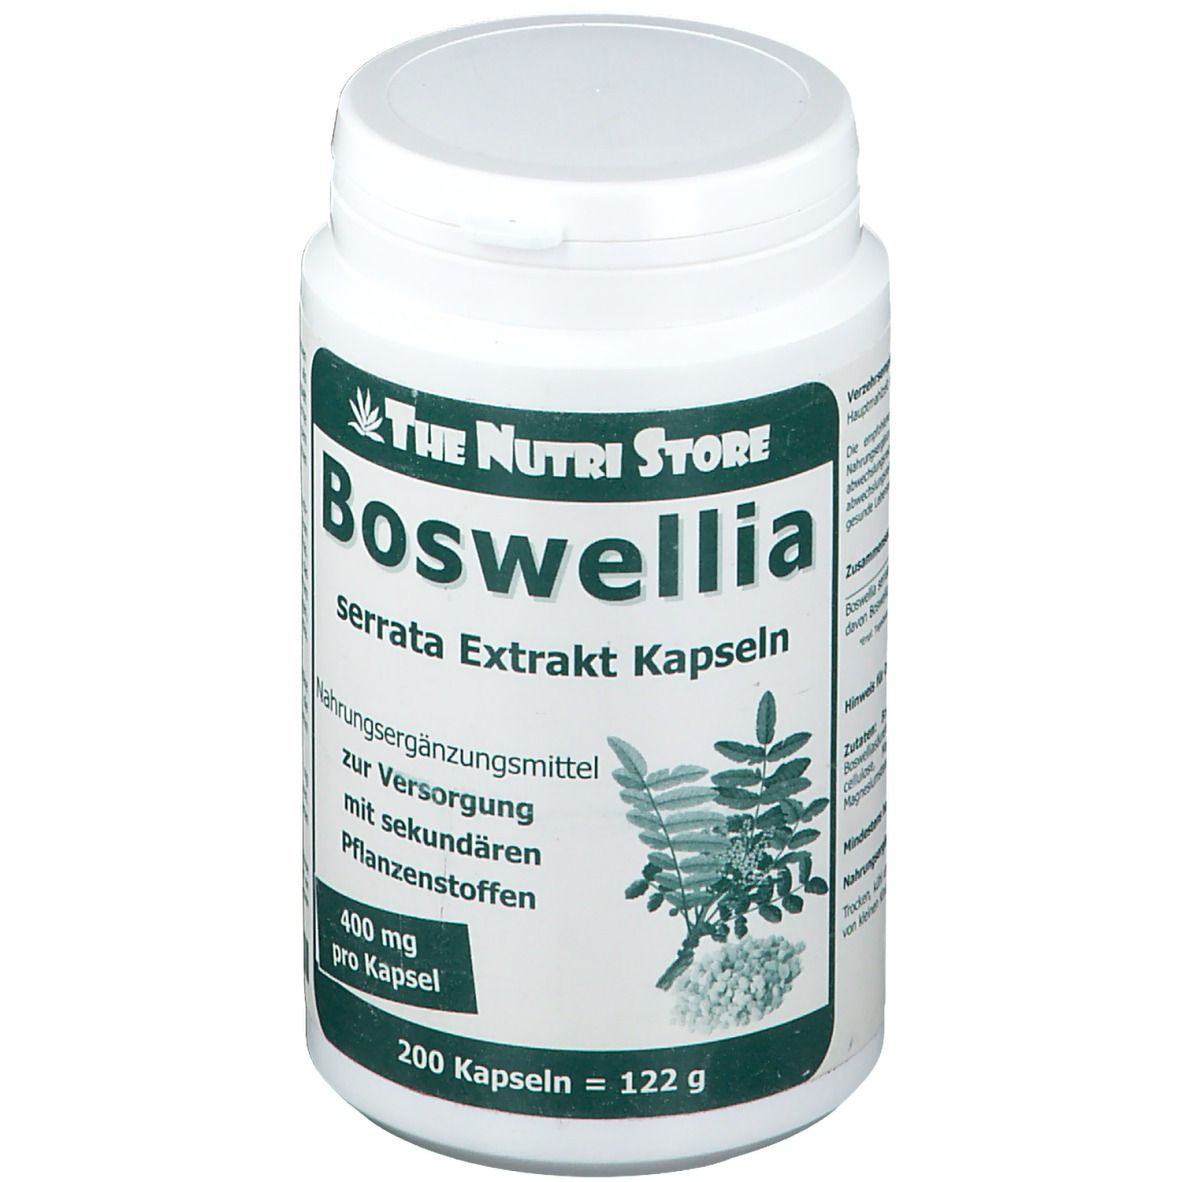 Boswellia serrata Extrakt Kapseln 400mg